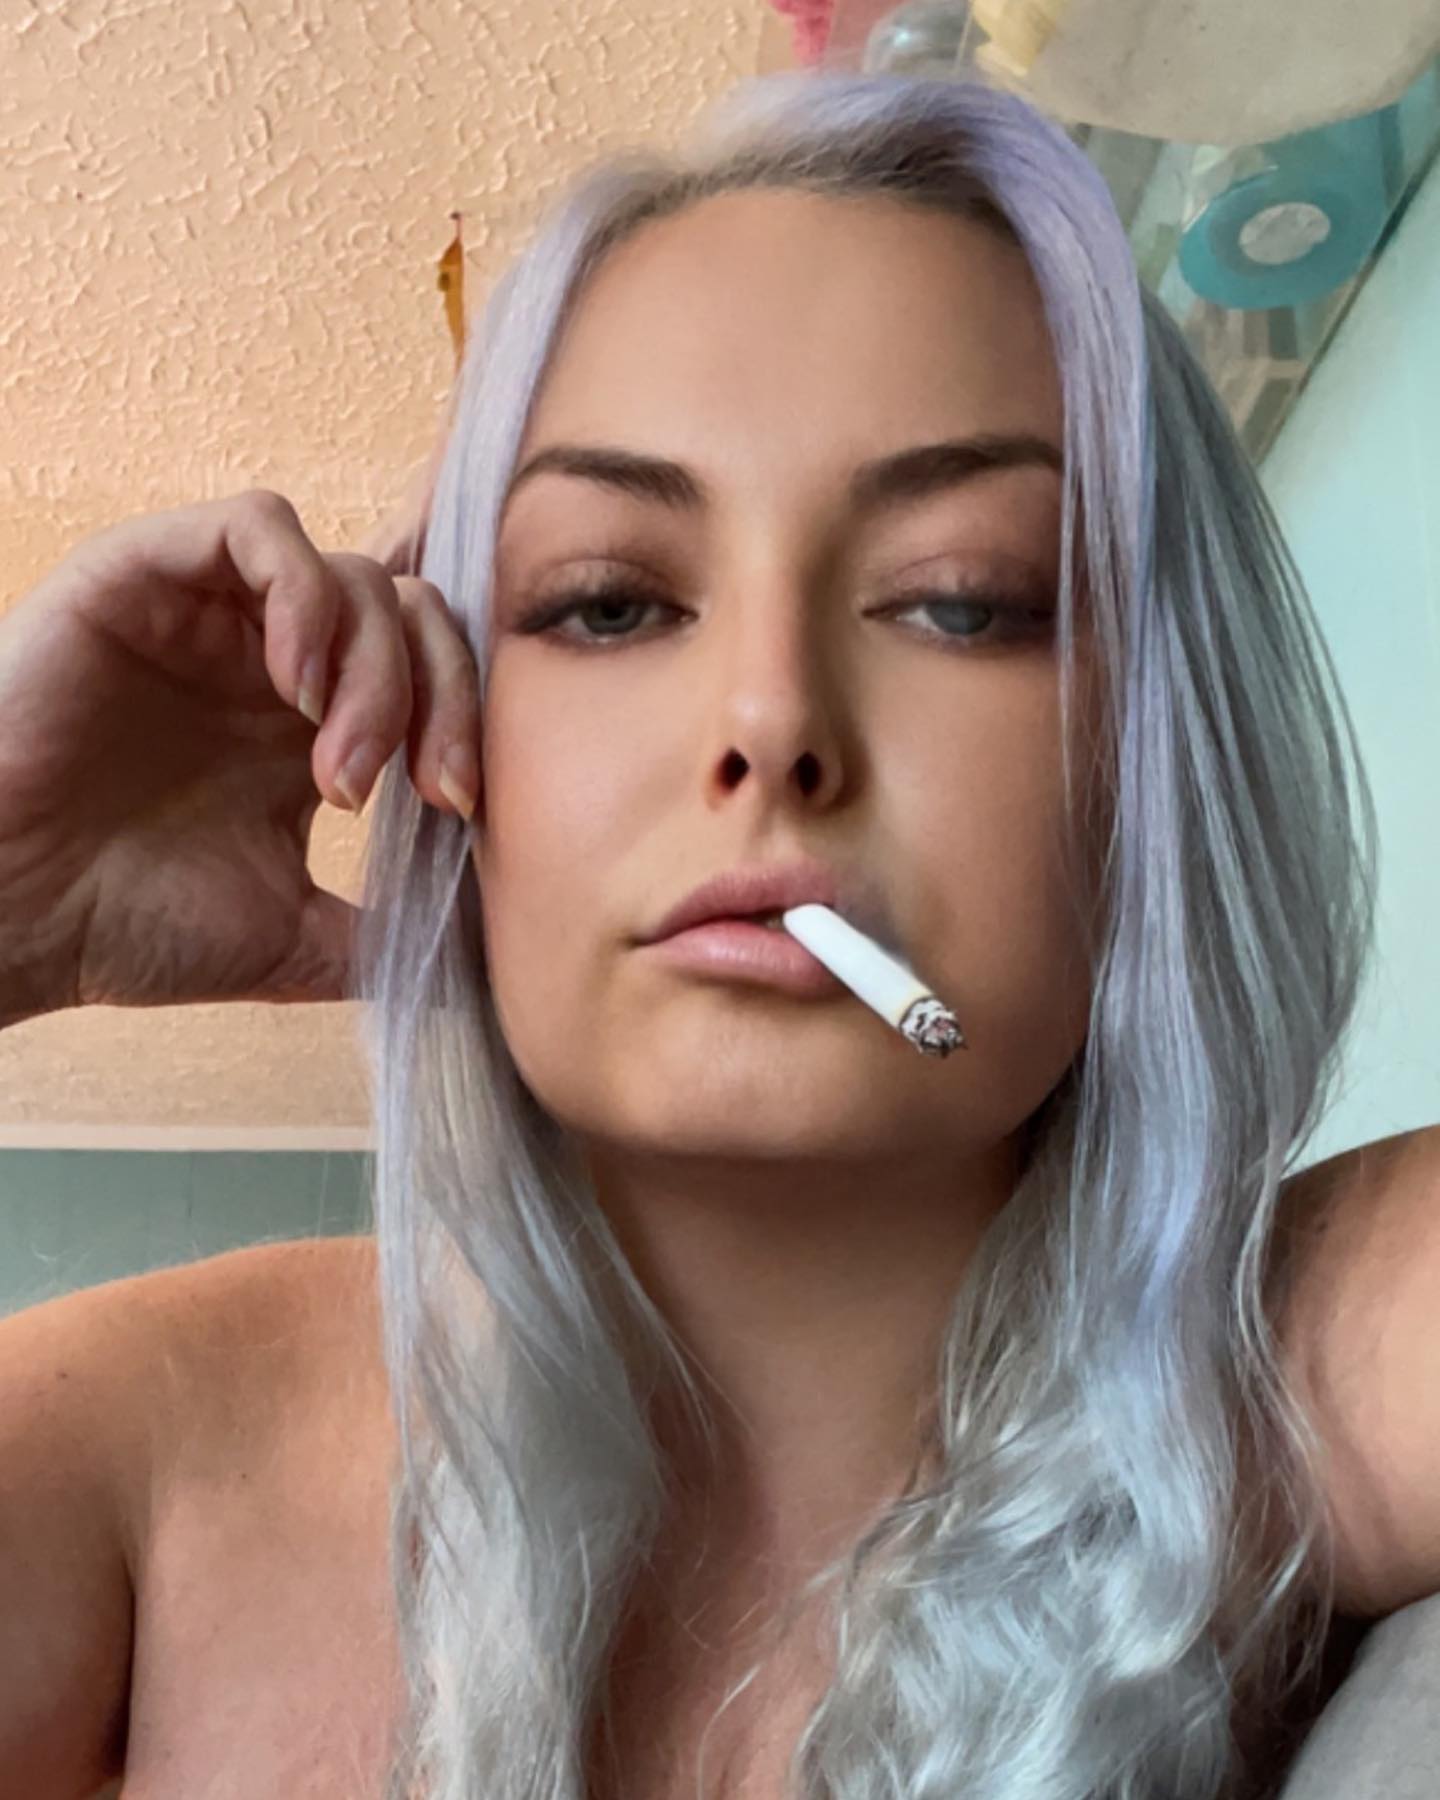 #goddess #newhairstyle #bleachblonde #longhair #smoking #dangle #cigarettedangle #cigarette #contentcreator #model #hottiewithabody #bikini #blueeyes #lips #smoking #smokey #smokinggirl #fetishmodel #beauty #babe #smokinggoddess #walletrinser #sissyslavewanted #paypigsonly #customvideos #custompictures #of #cloudsofsmoke #walletrinsequeen